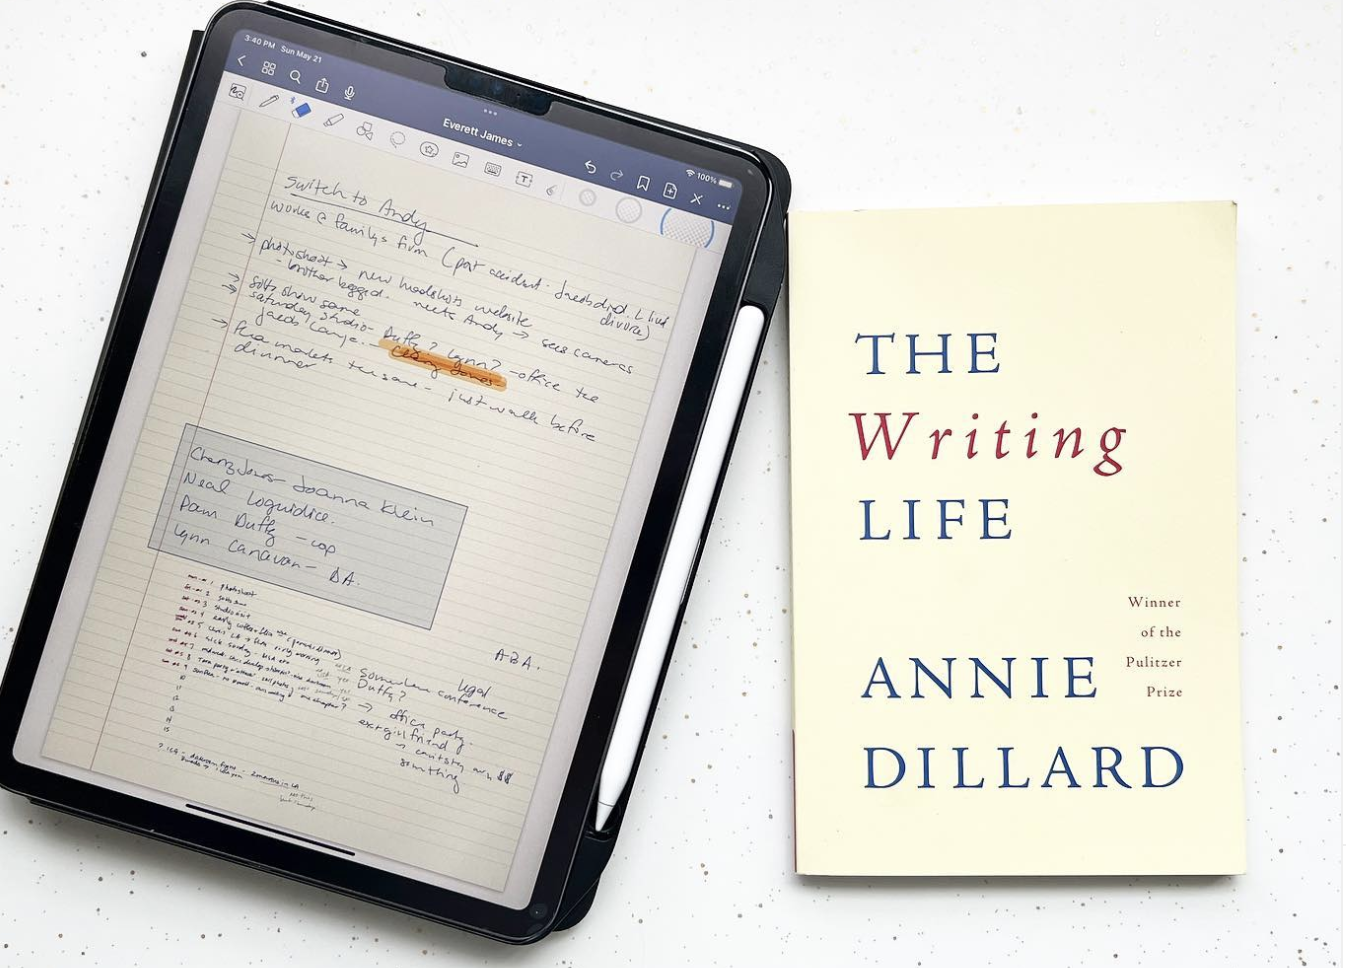 120: The Writing Life by Annie Dillard